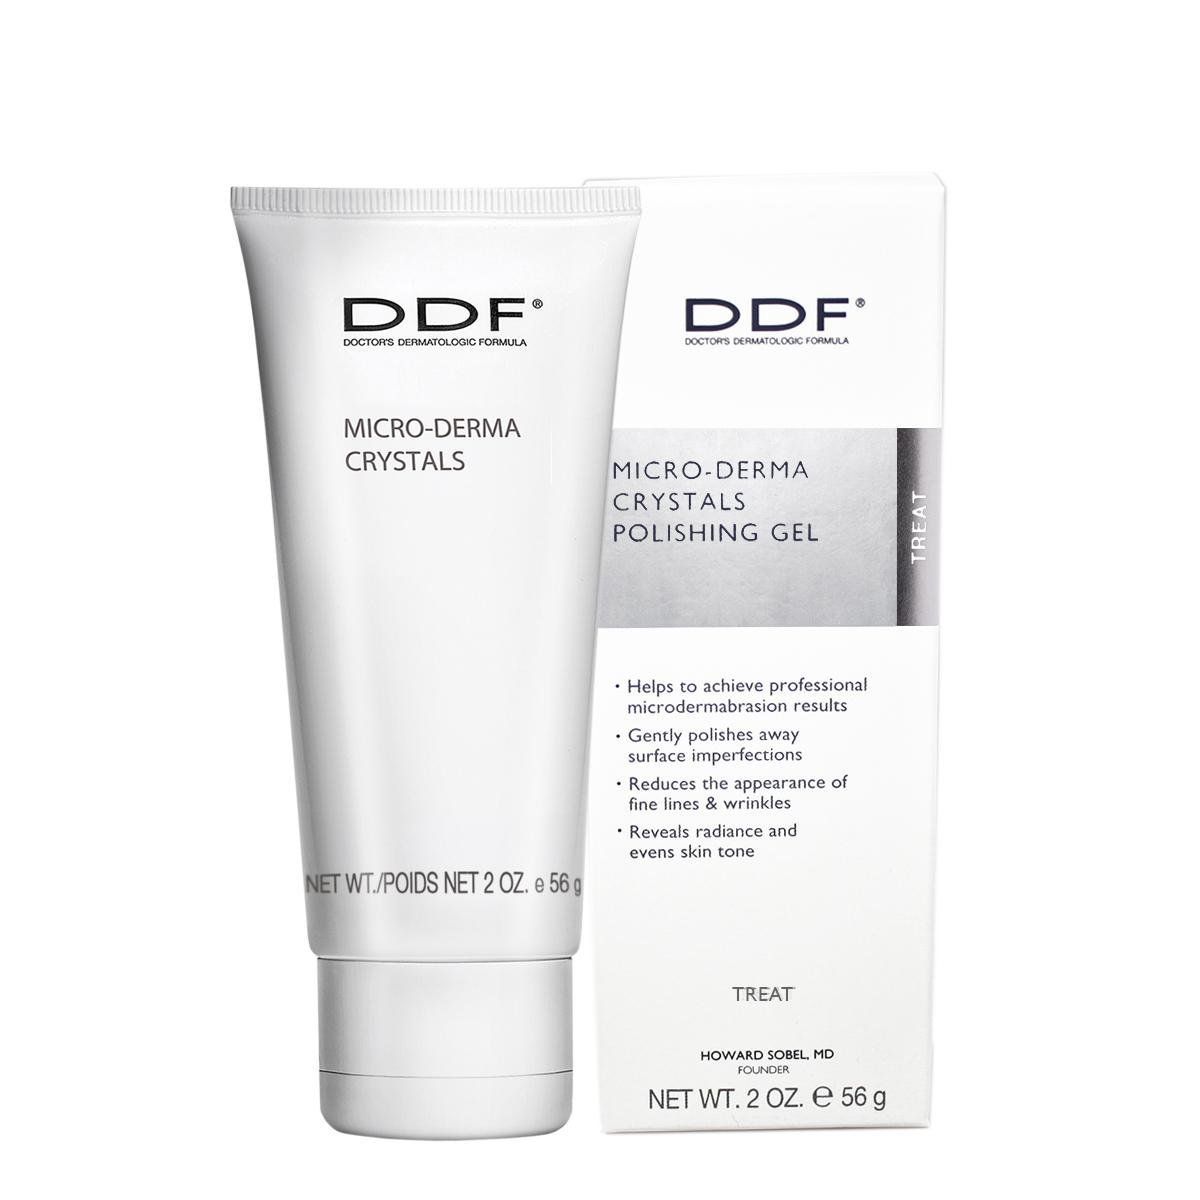 Ddf facial products